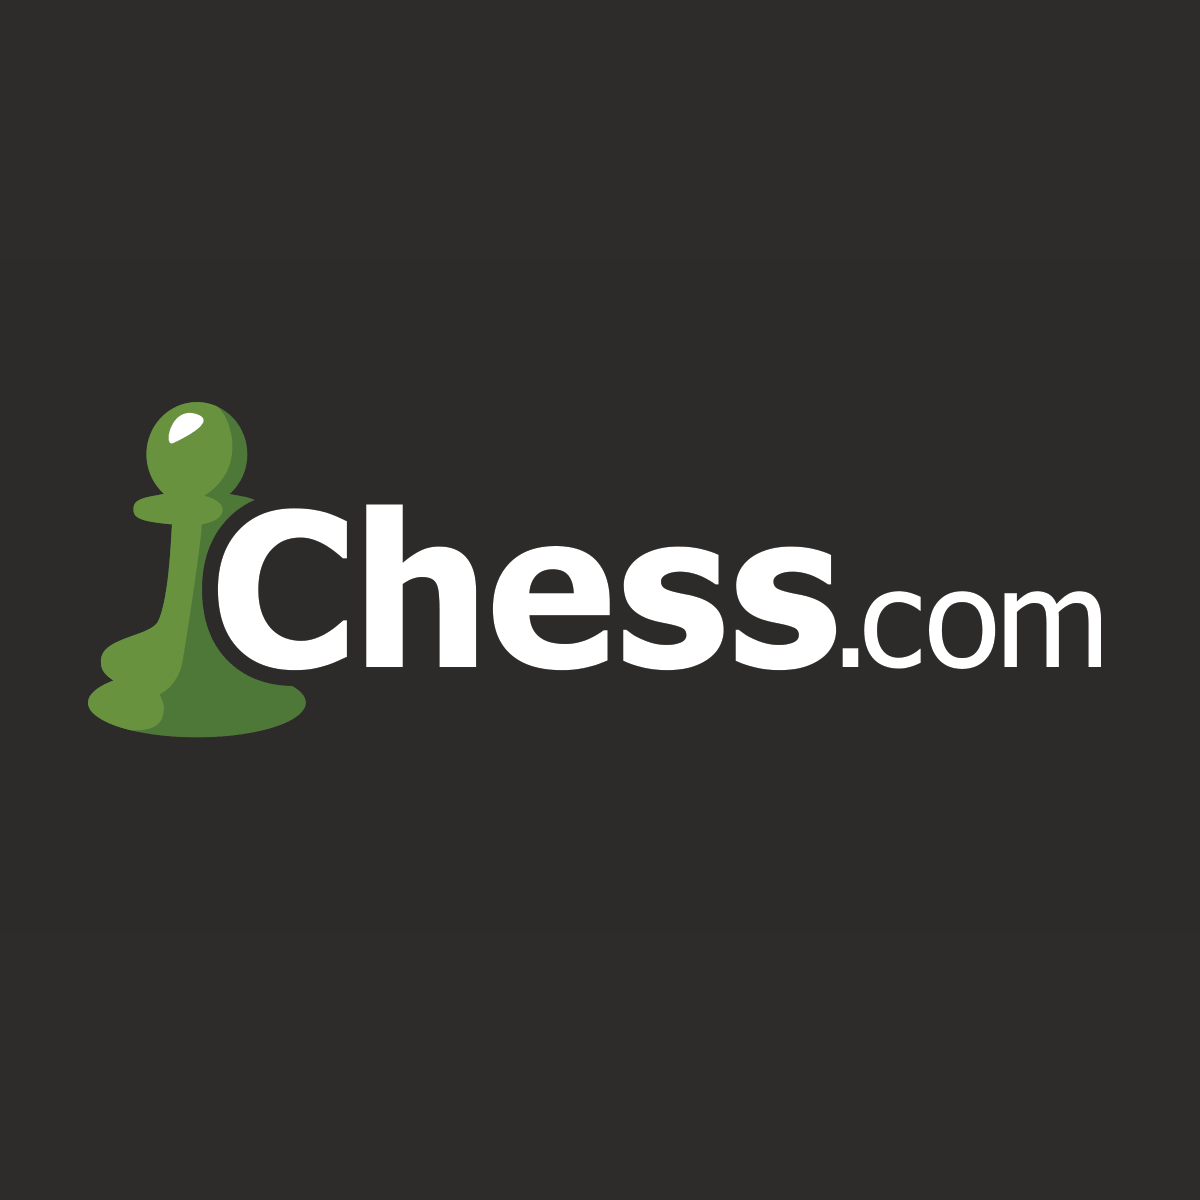 Ybmate com. Chess.com. Значок Chess.com. Логотип ческом.